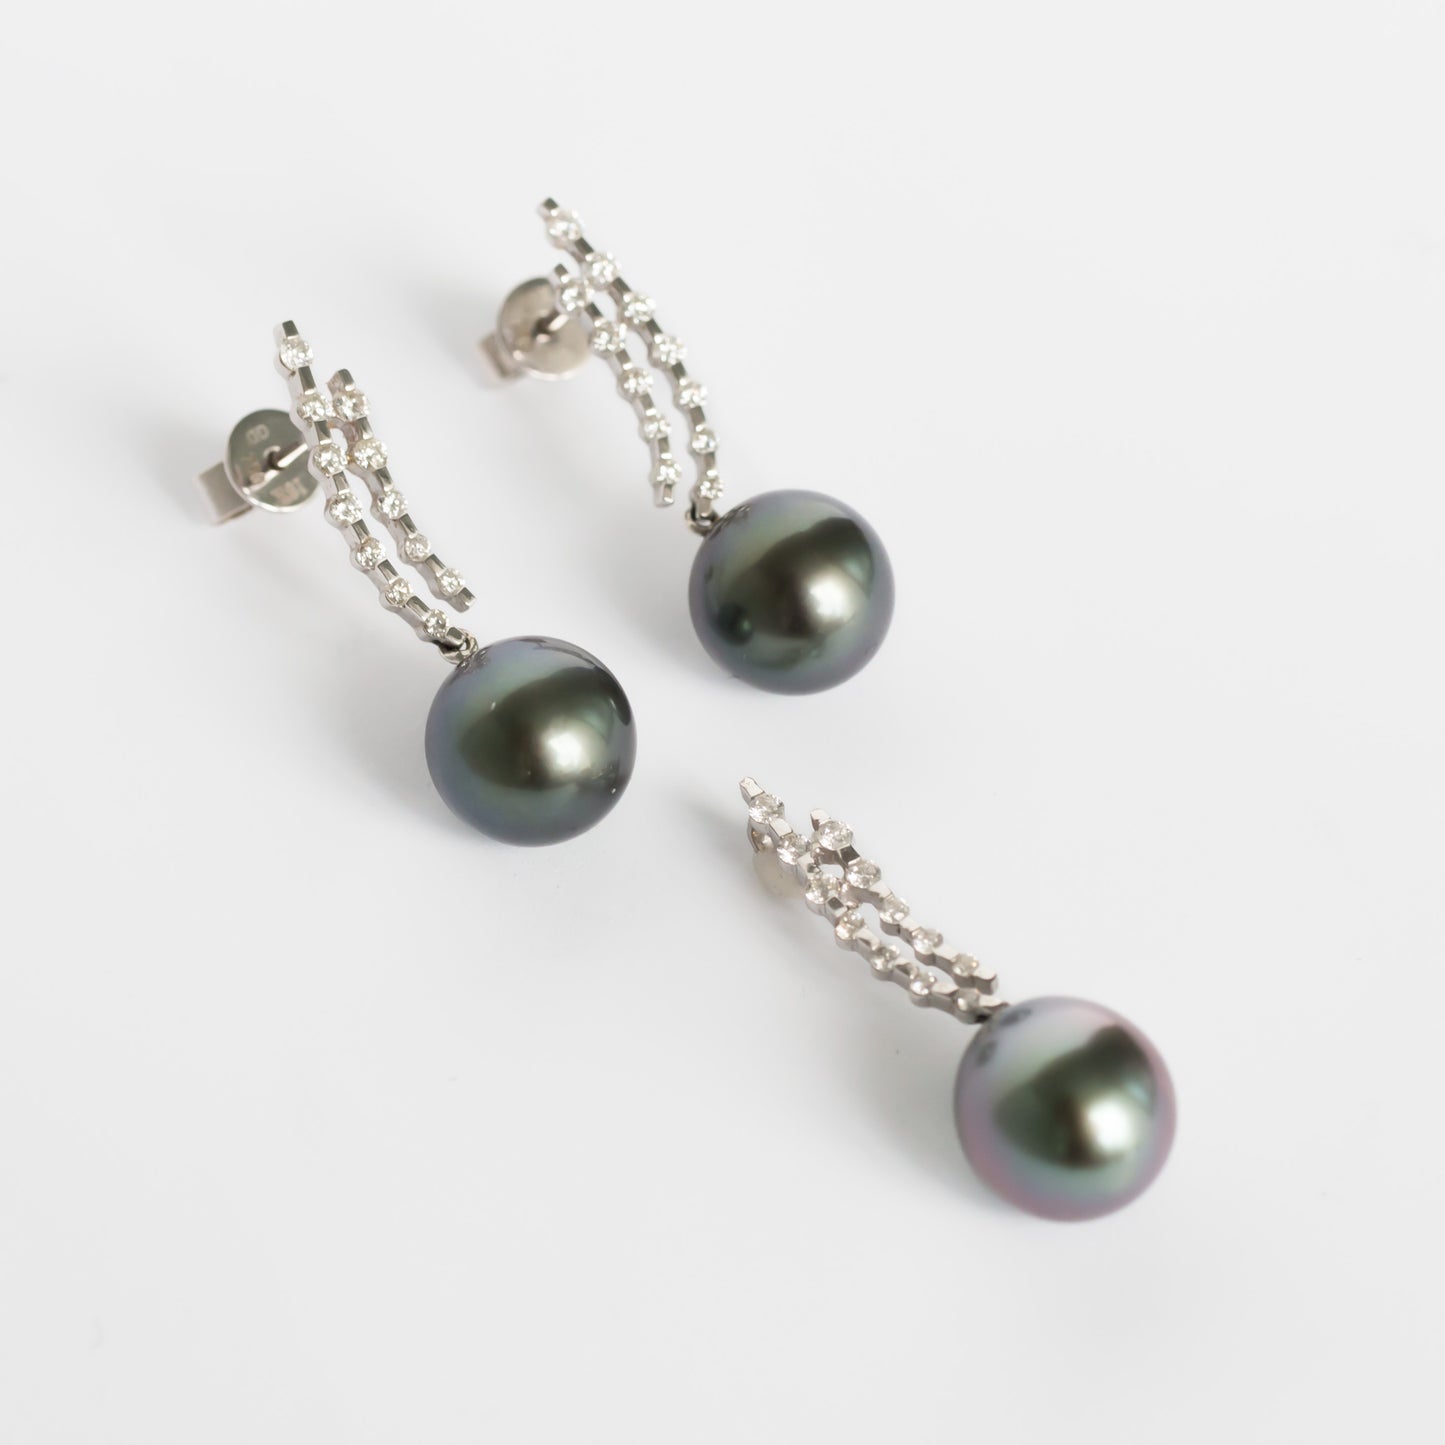 Diamond and Pearl Earrings and Pendant Set